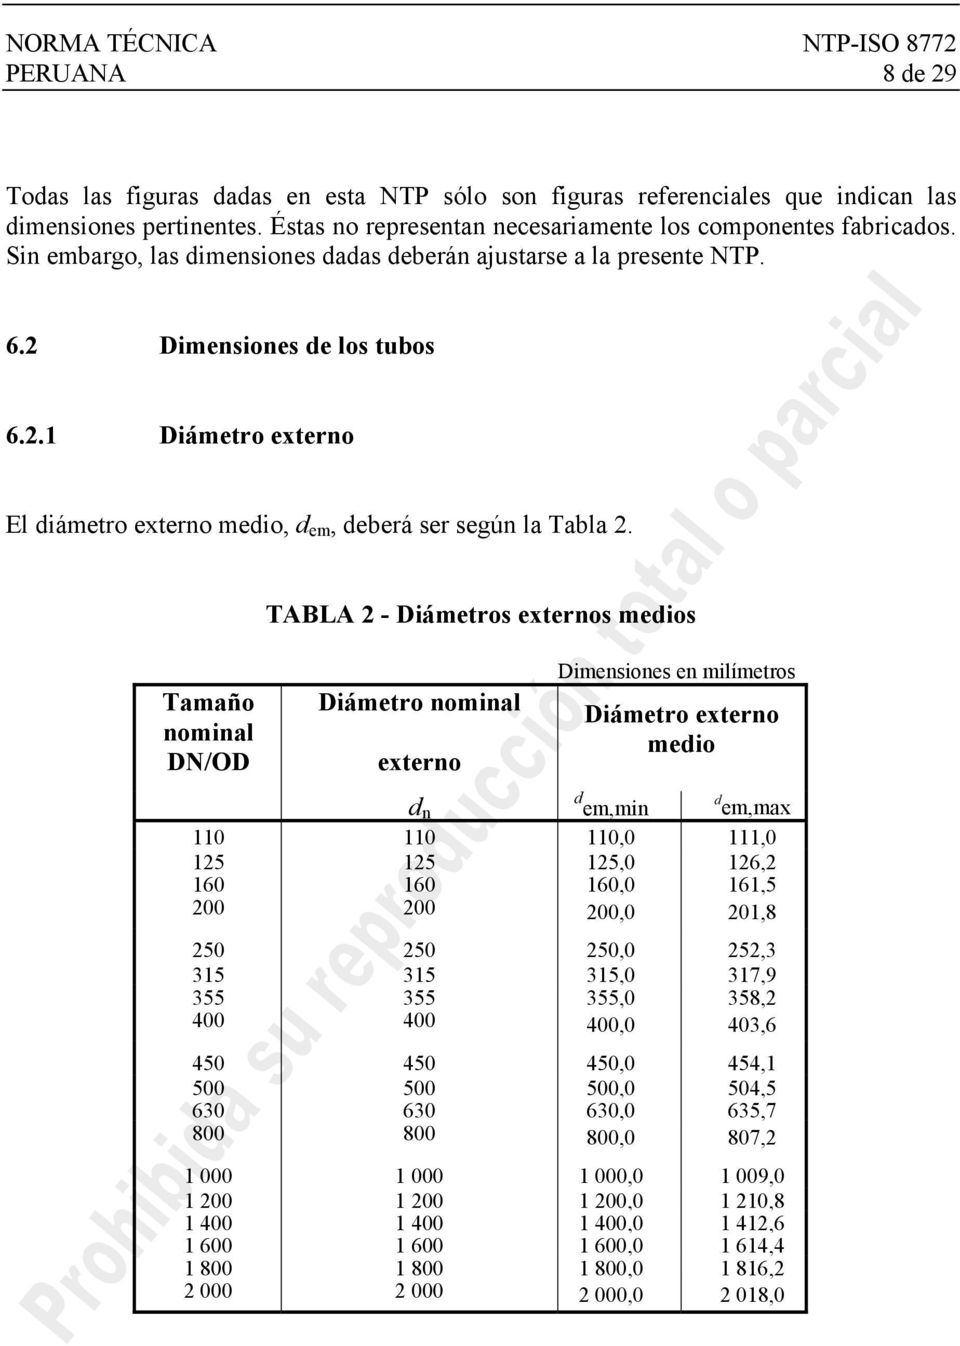 TABLA 2 - Diámetros externos medios Tamaño nominal DN/OD Diámetro nominal externo Dimensiones en milímetros Diámetro externo medio d n d em,min d em,max 110 110 110,0 111,0 125 125 125,0 126,2 160